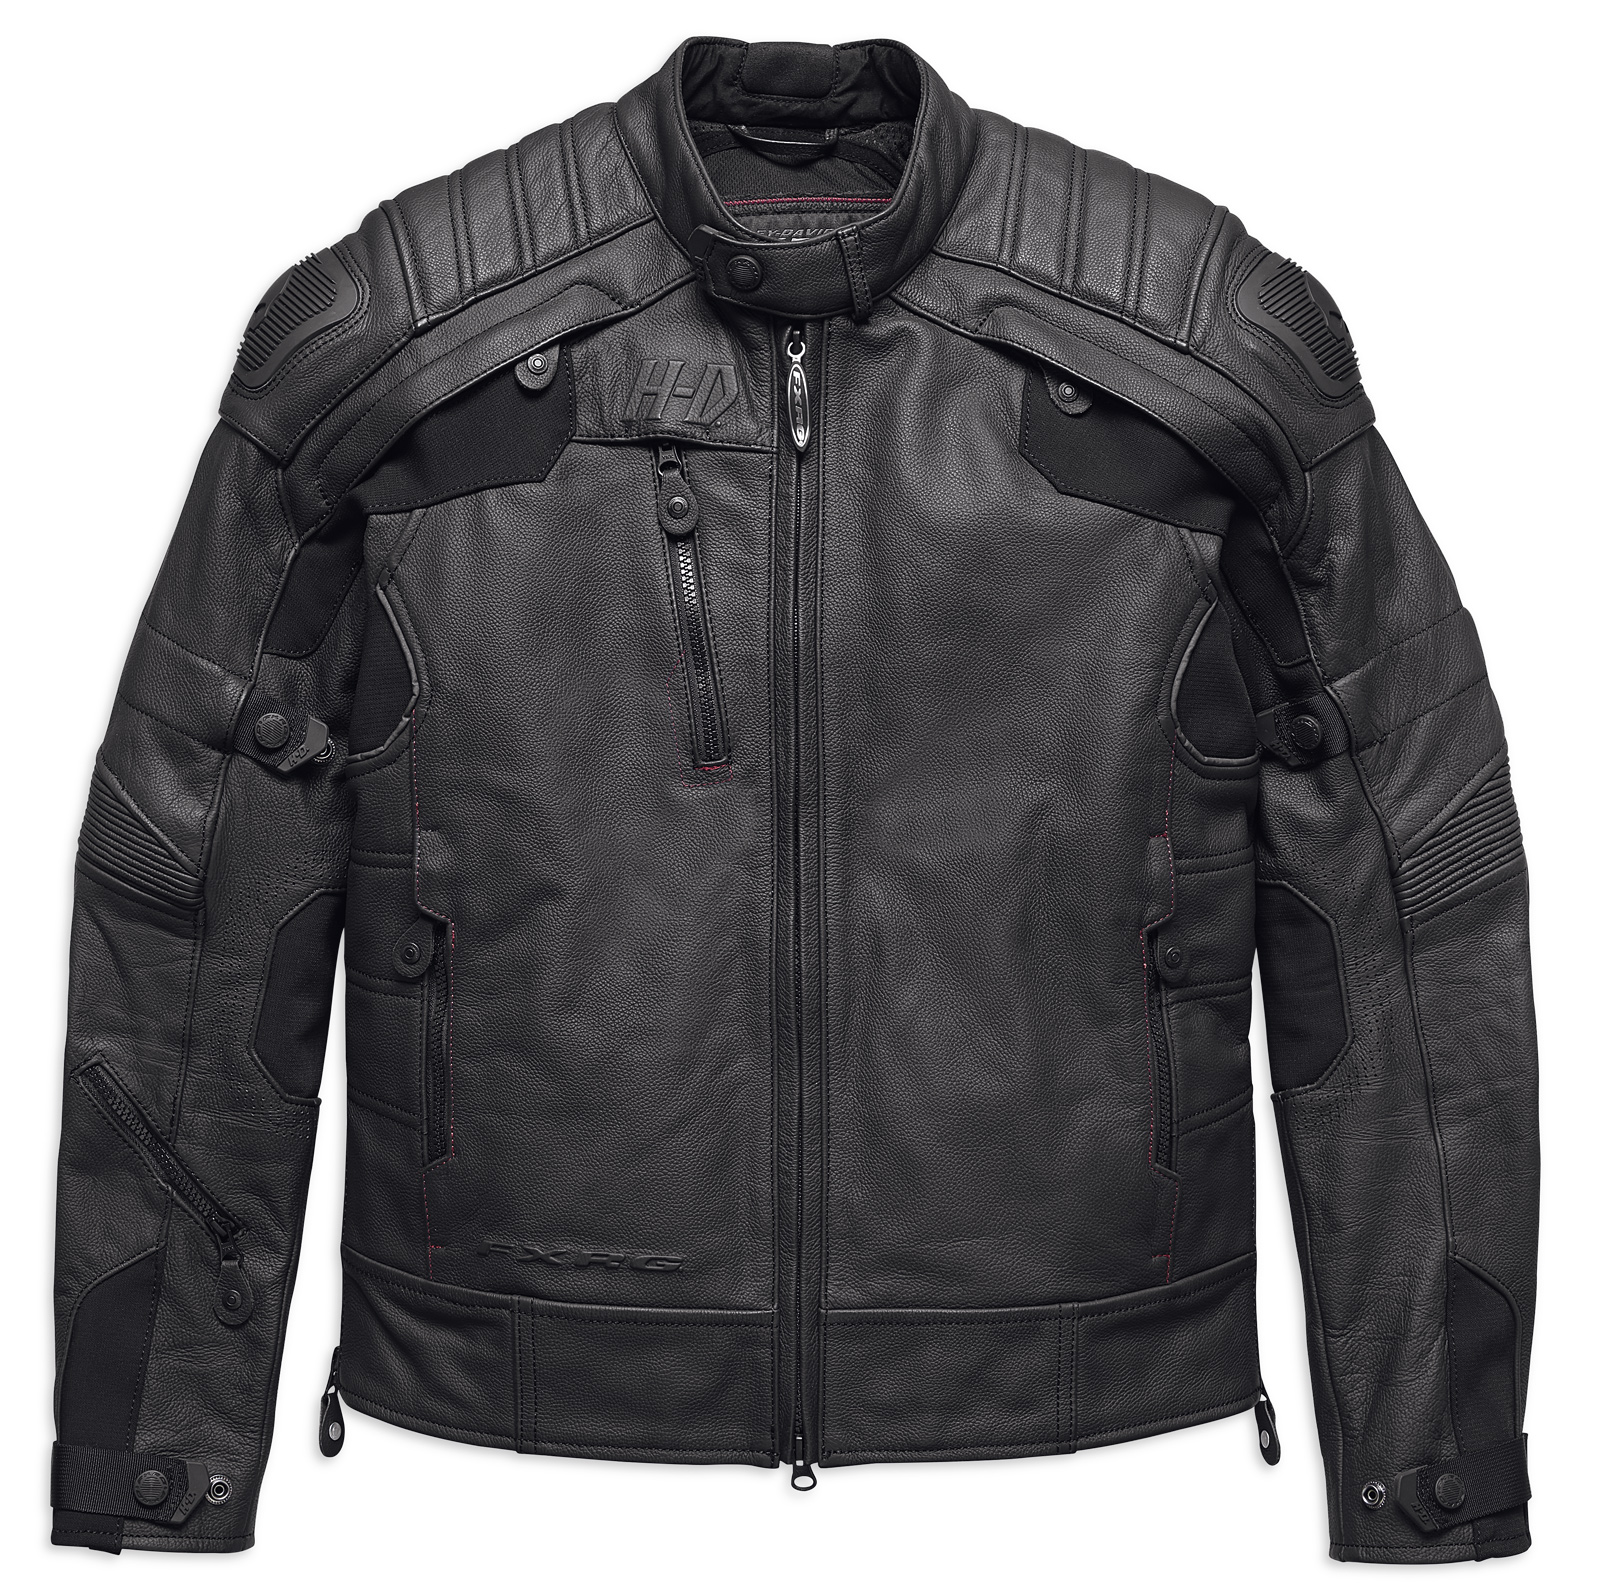 FXRG Harley leather jacket for sale